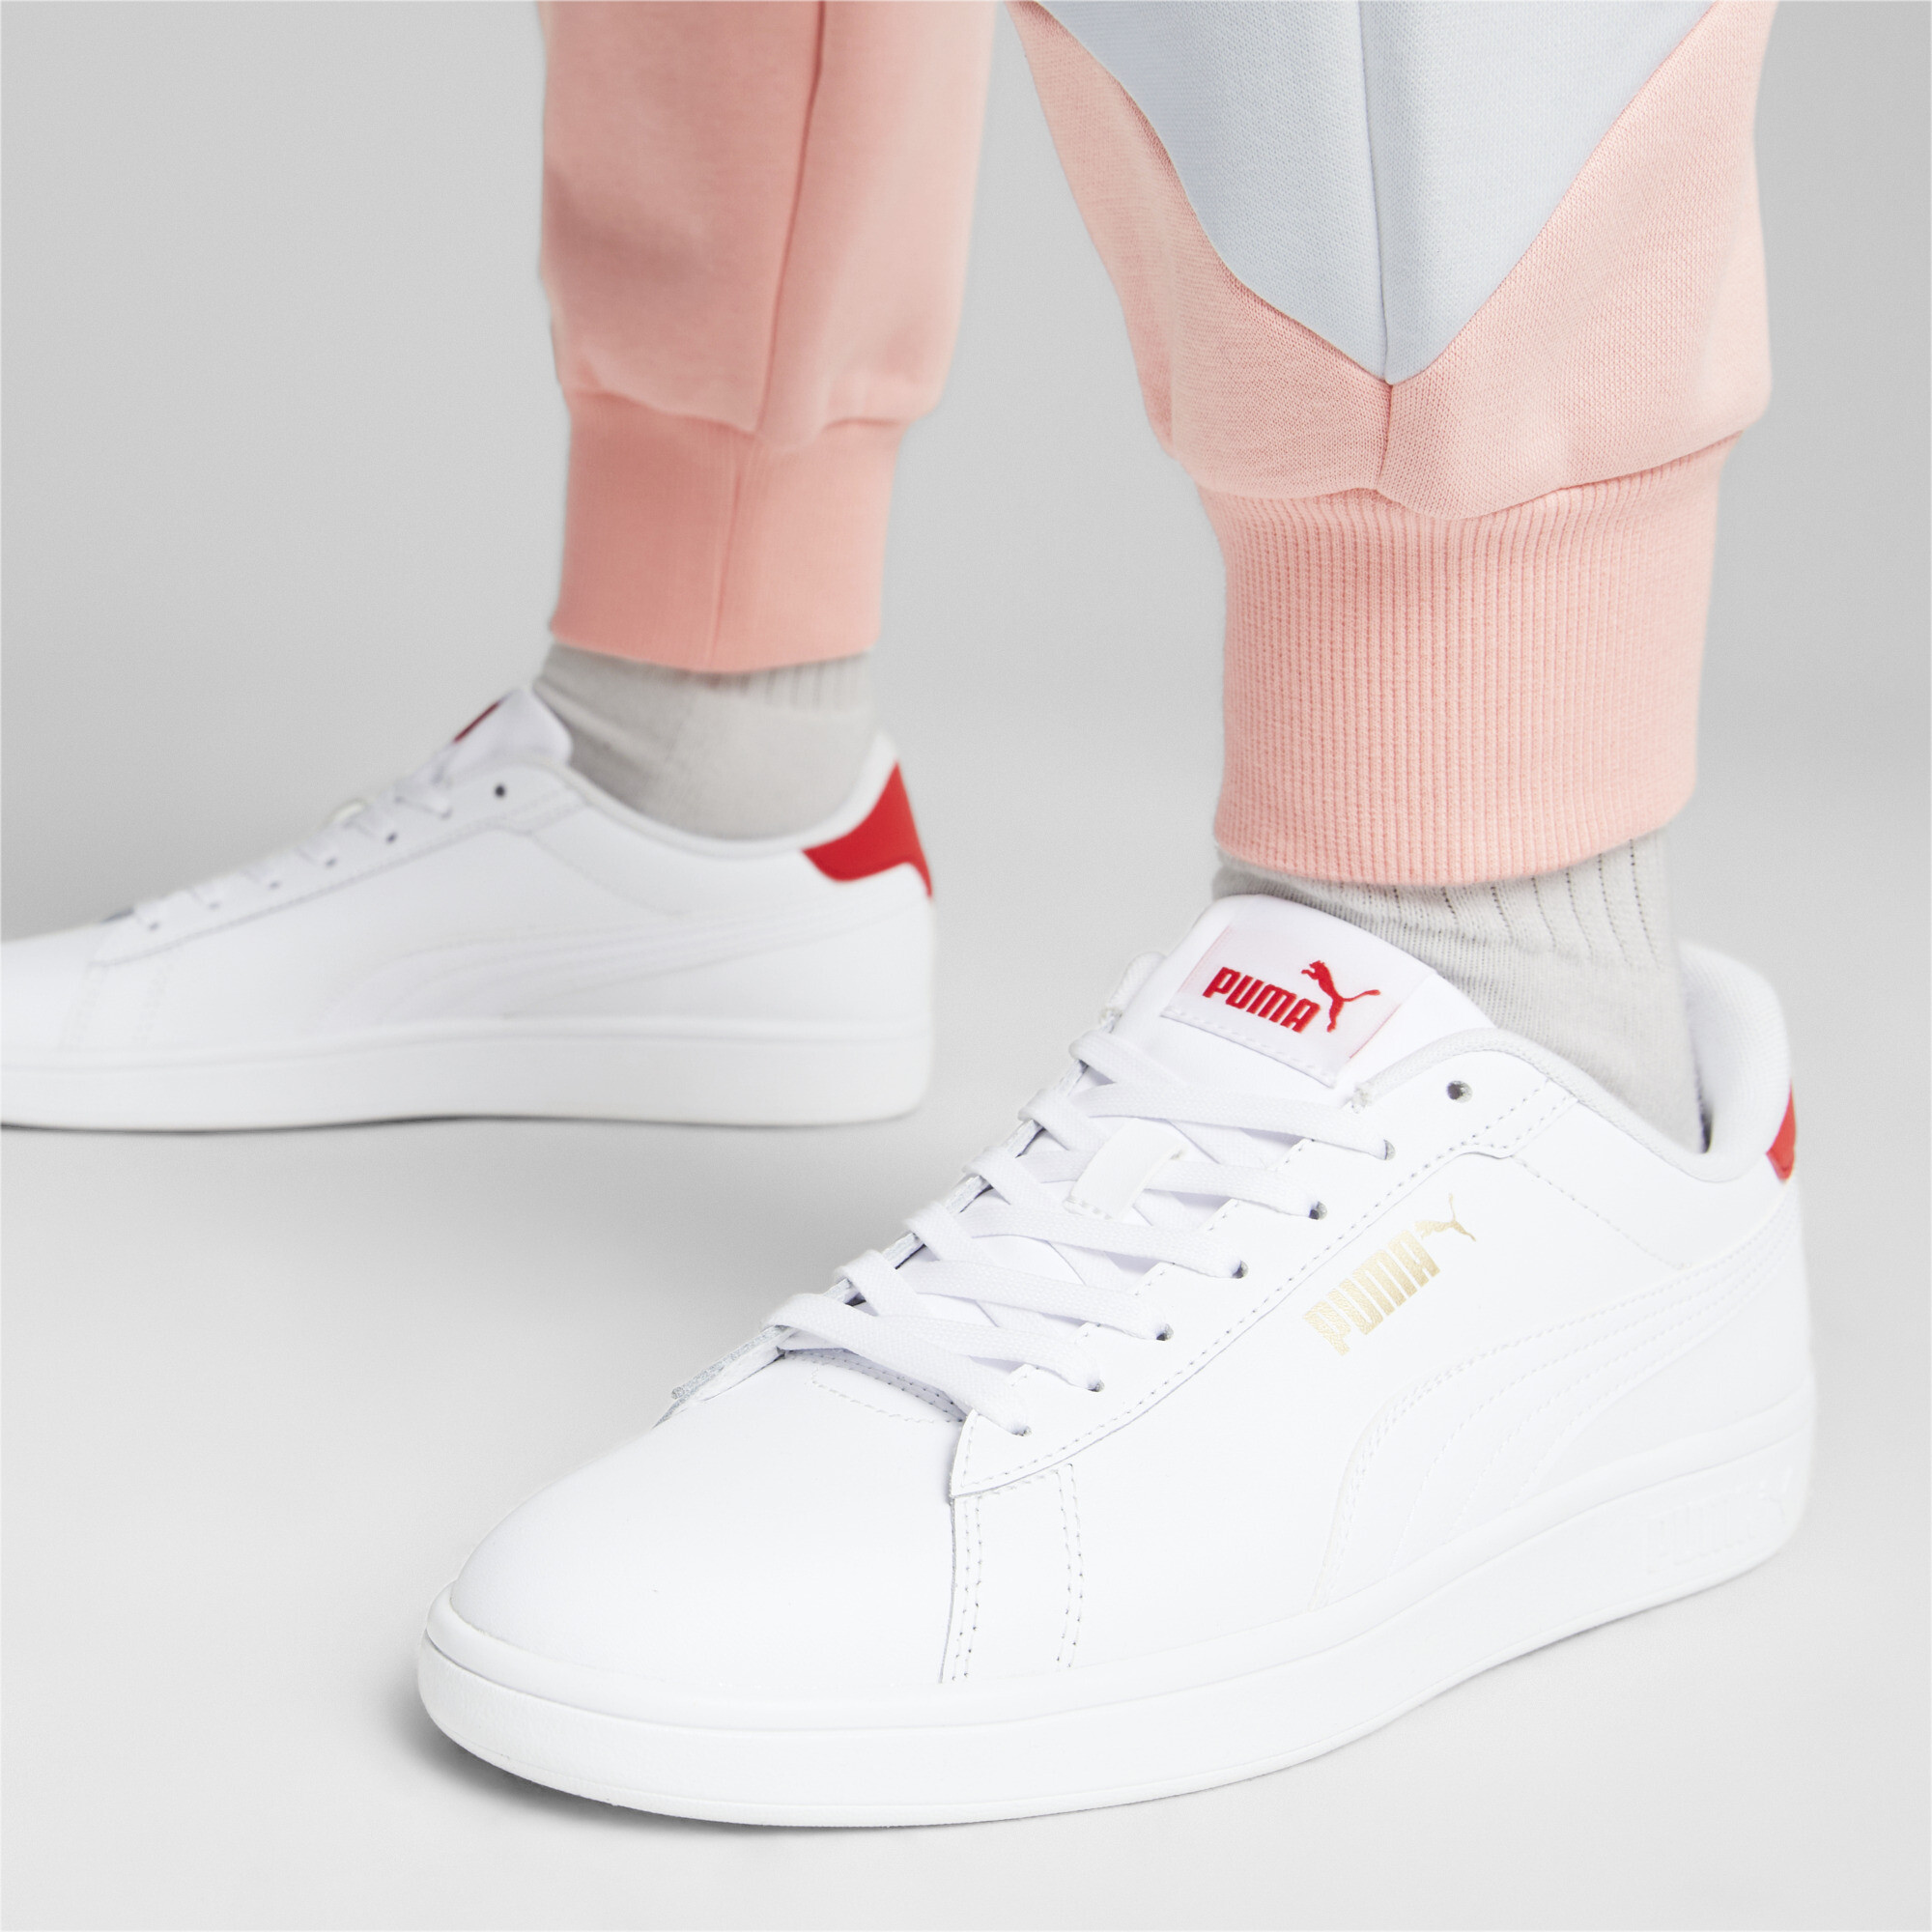 Puma Smash 3.0 L Sneakers, White, Size 38, Shoes